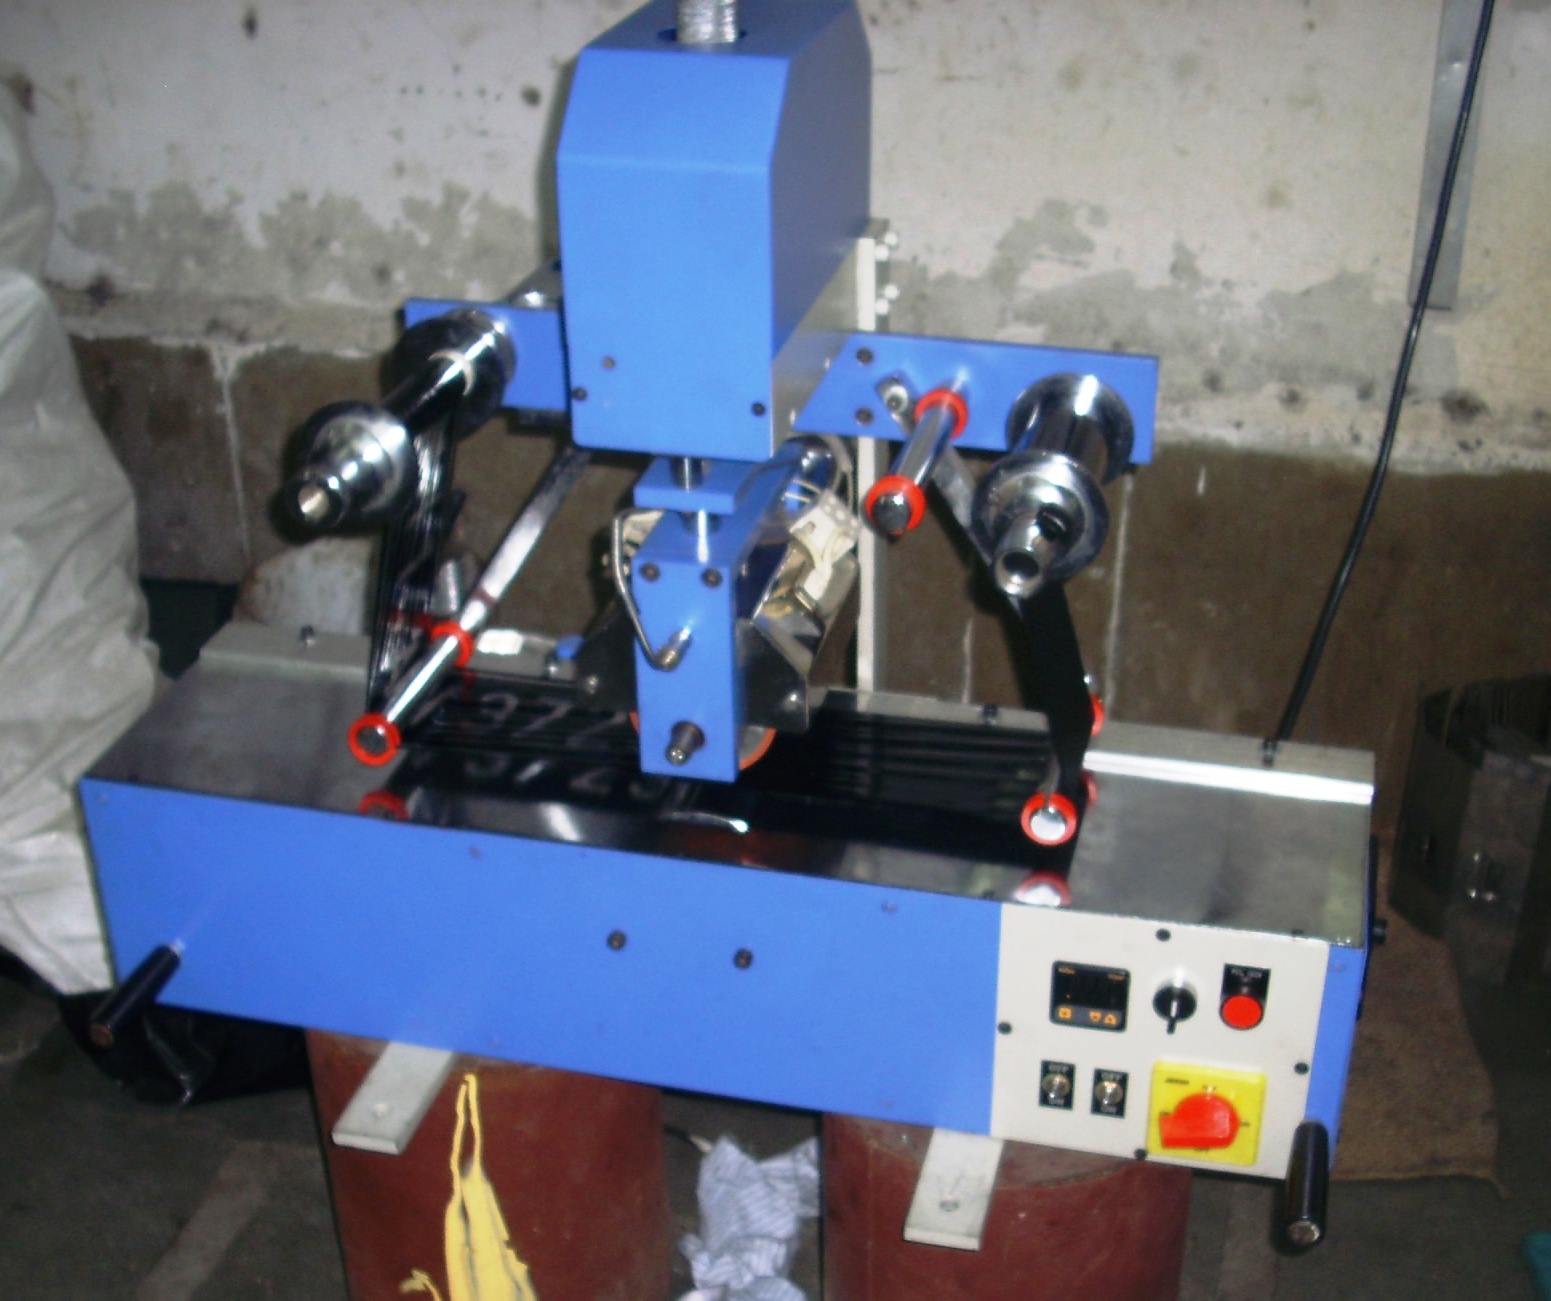 Hot Stamping machine Manufacturer Supplier Wholesale Exporter Importer Buyer Trader Retailer in Pune Maharashtra India